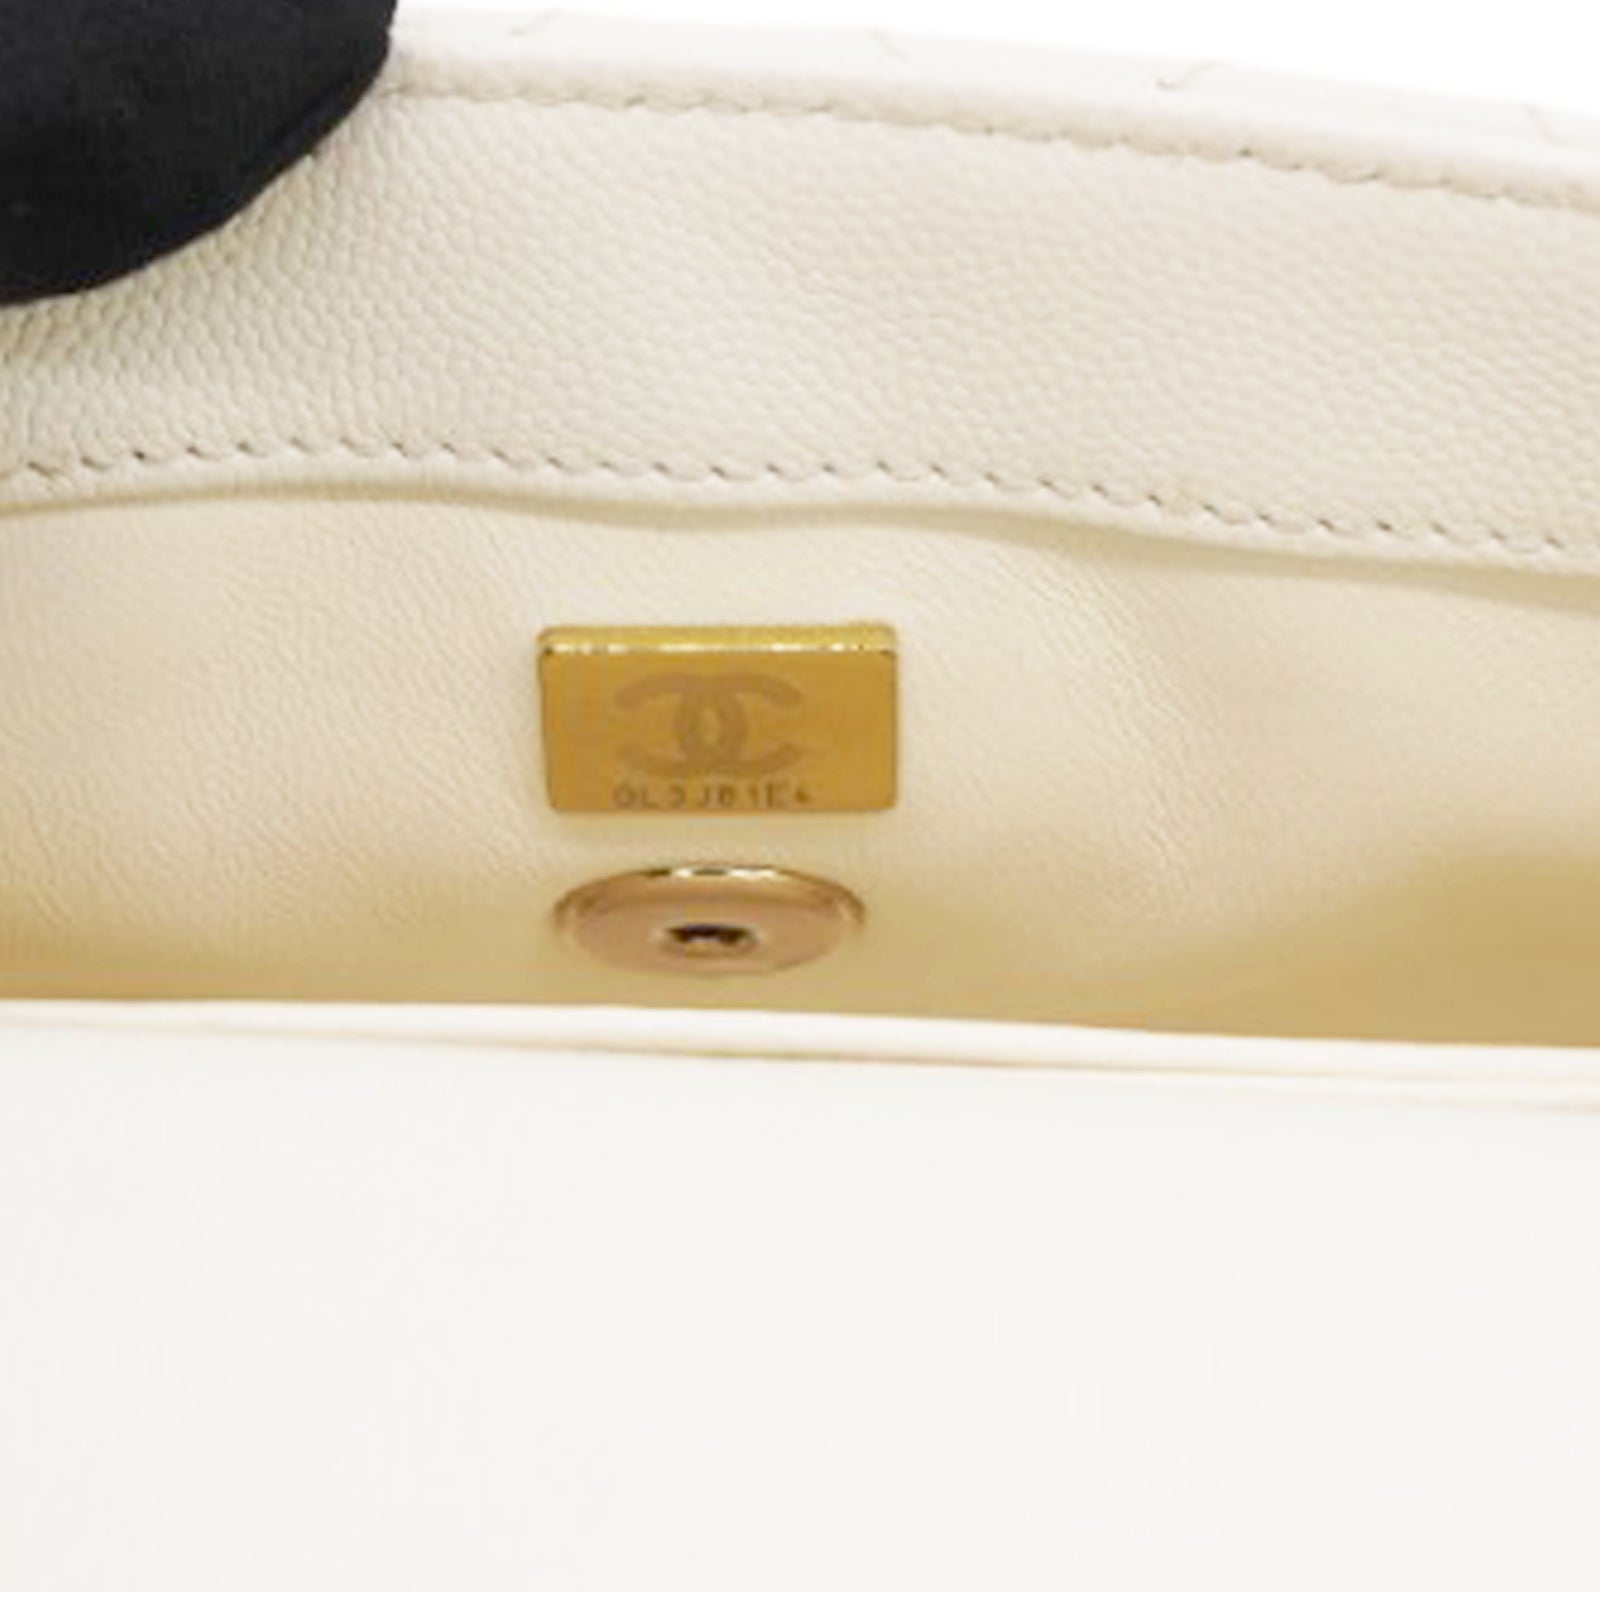 How to authenticate Chanel handbag?